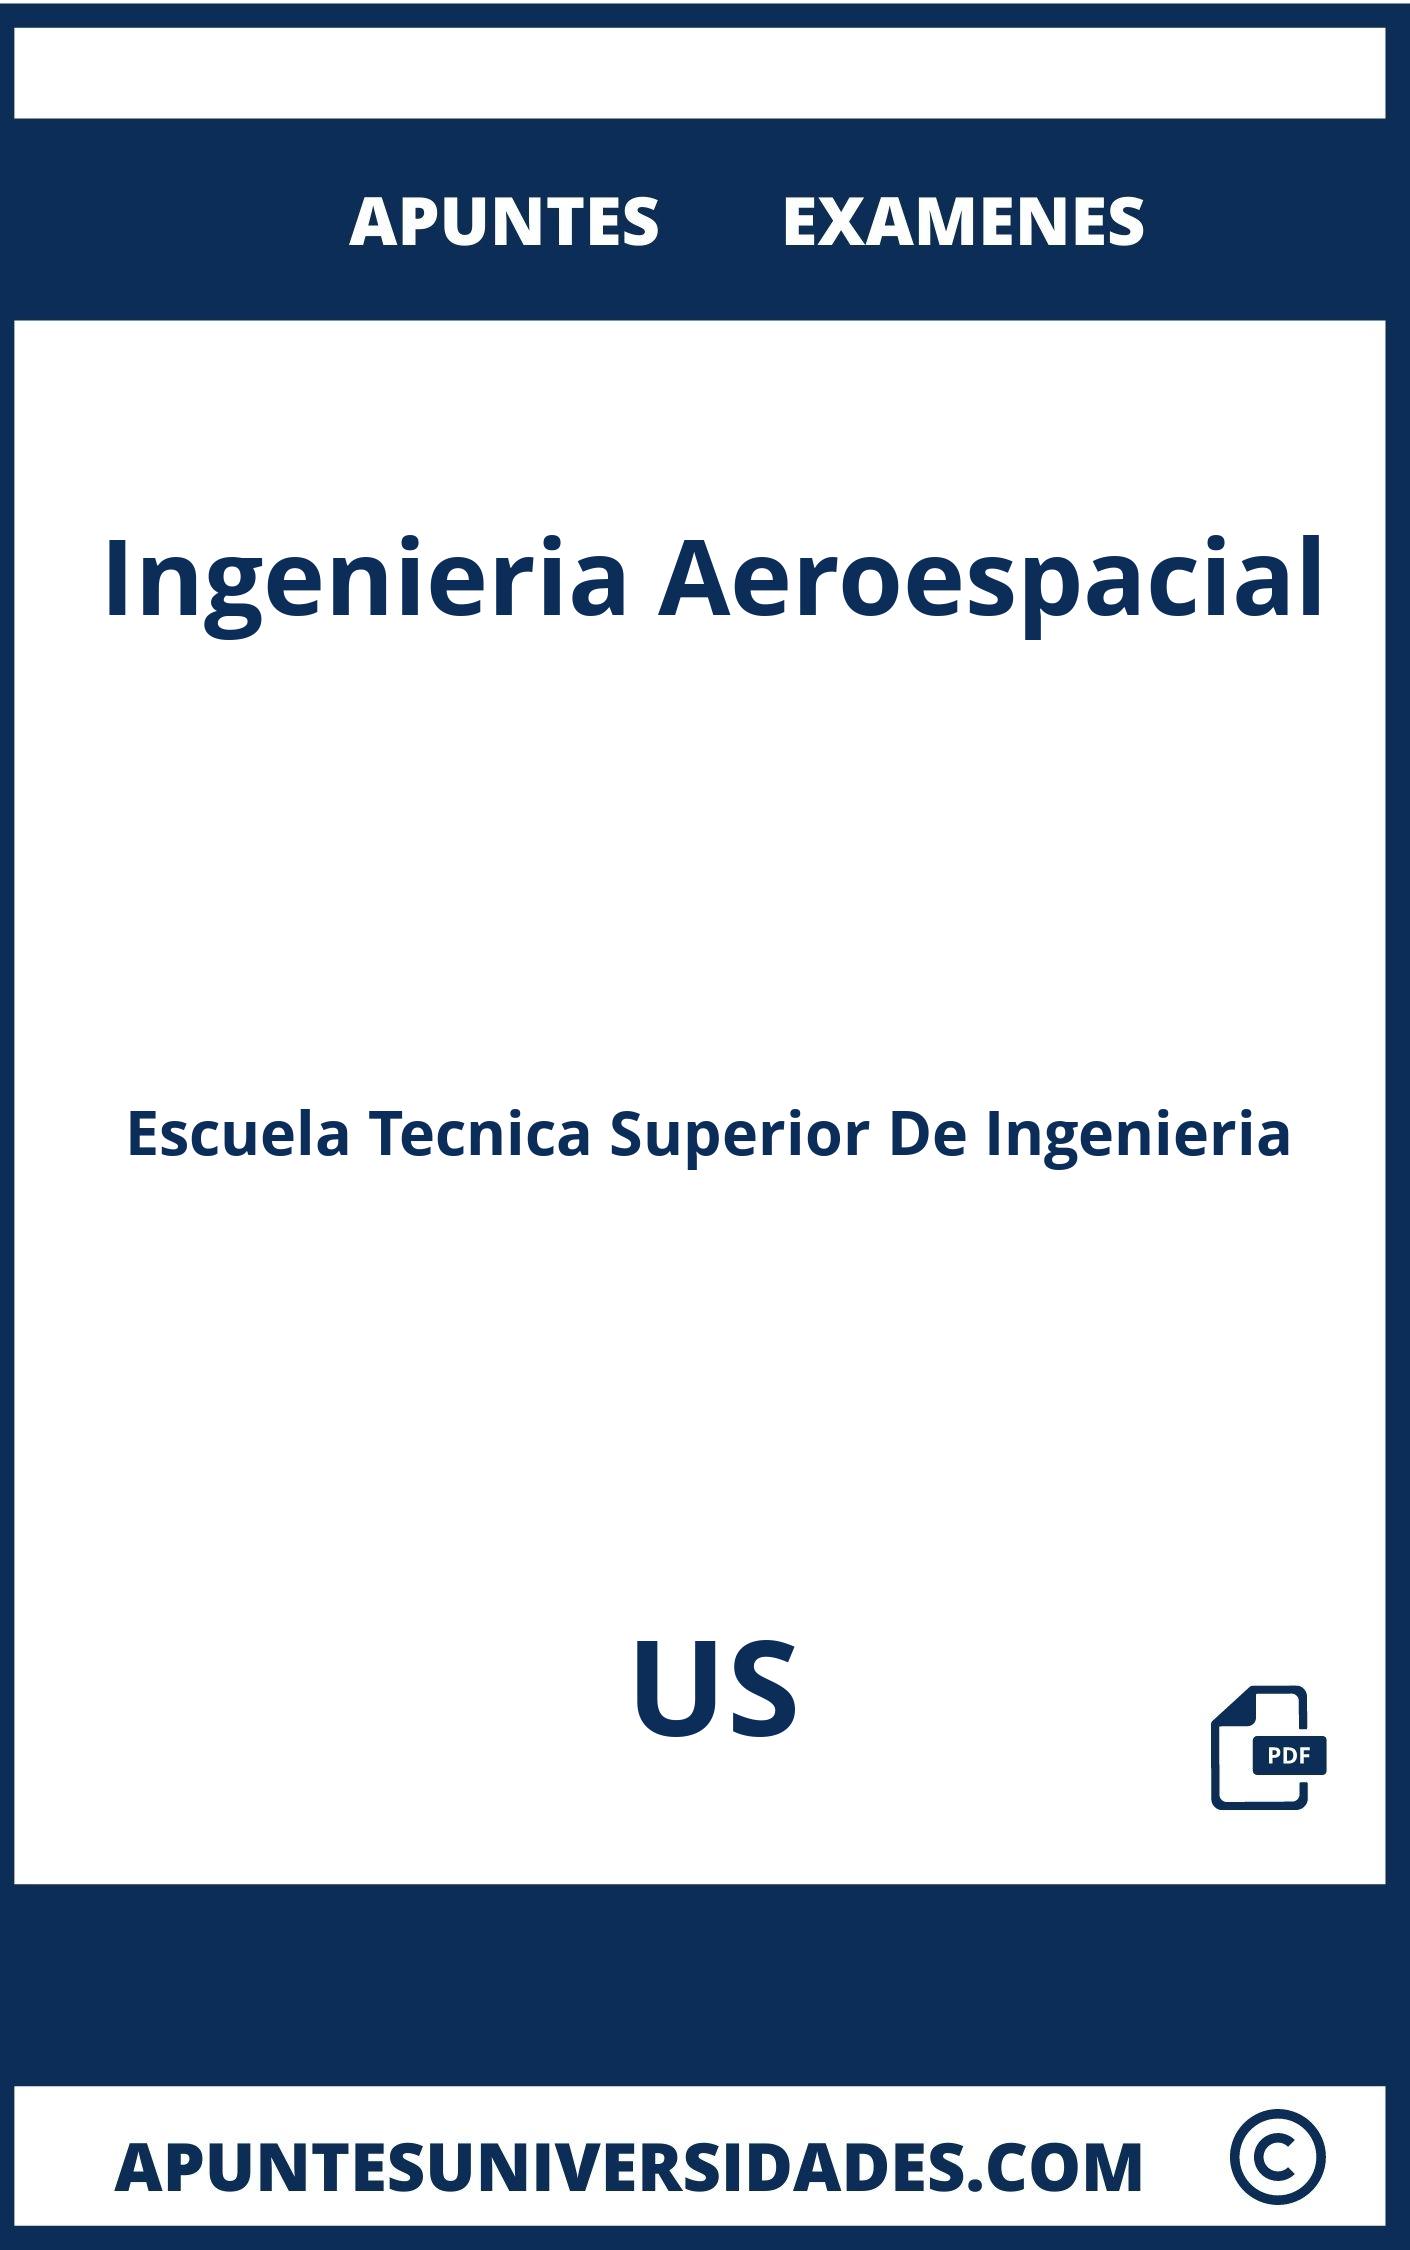 Apuntes Examenes Ingenieria Aeroespacial US